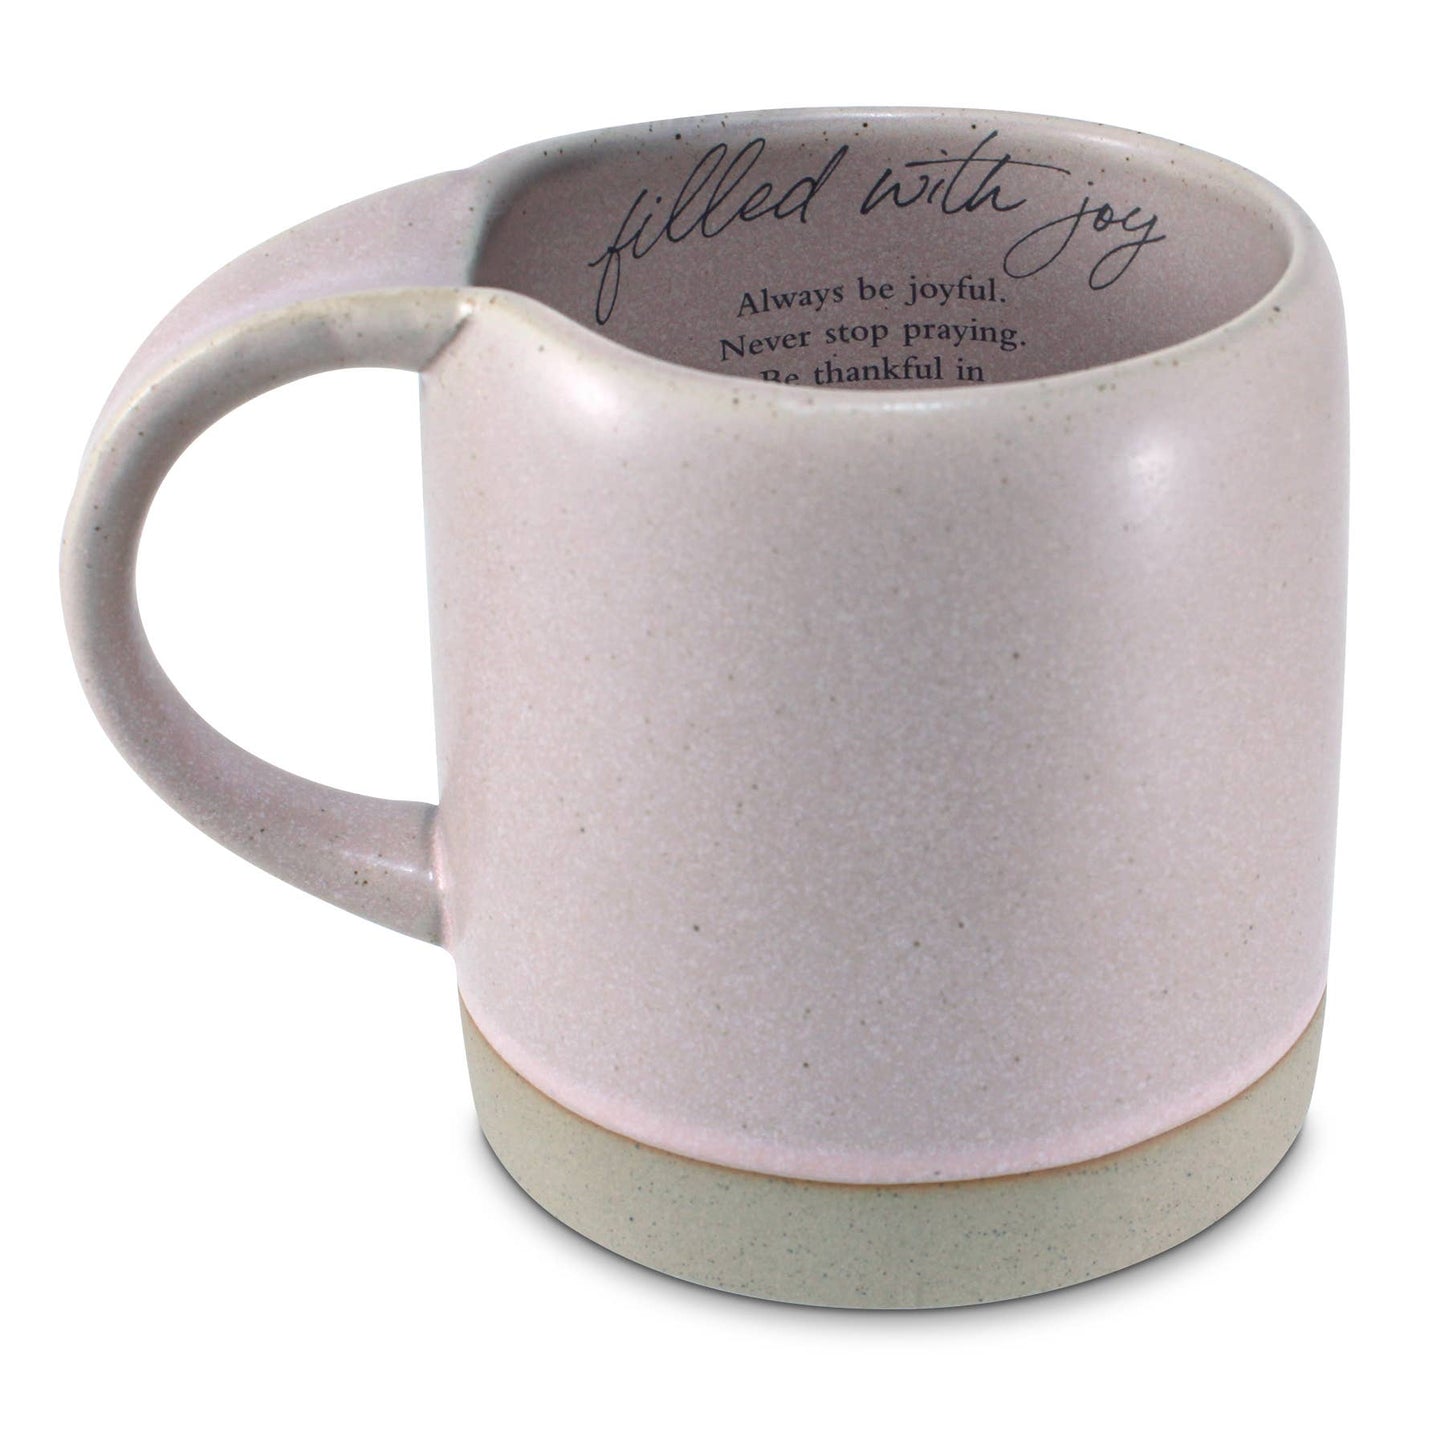 Mug Crafted Inspiration Filled With Joy